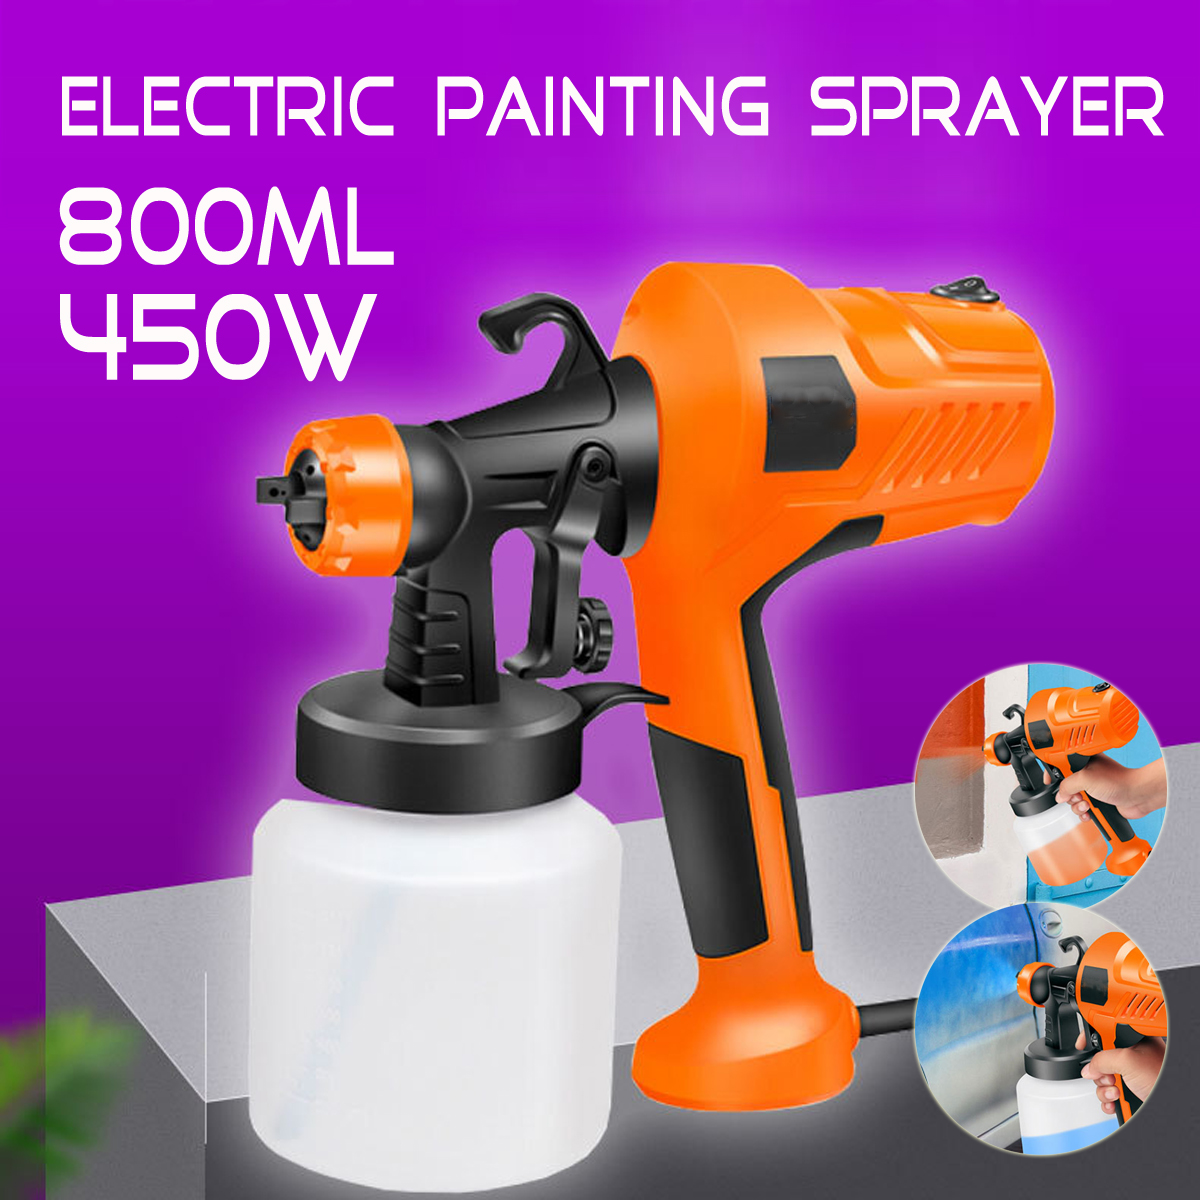 450W-800ML-Electric-Spray-Paint-Sprayer-Home-Car-Painting-Tool-Adjustable-Nozzle-Random-Color-1692630-1